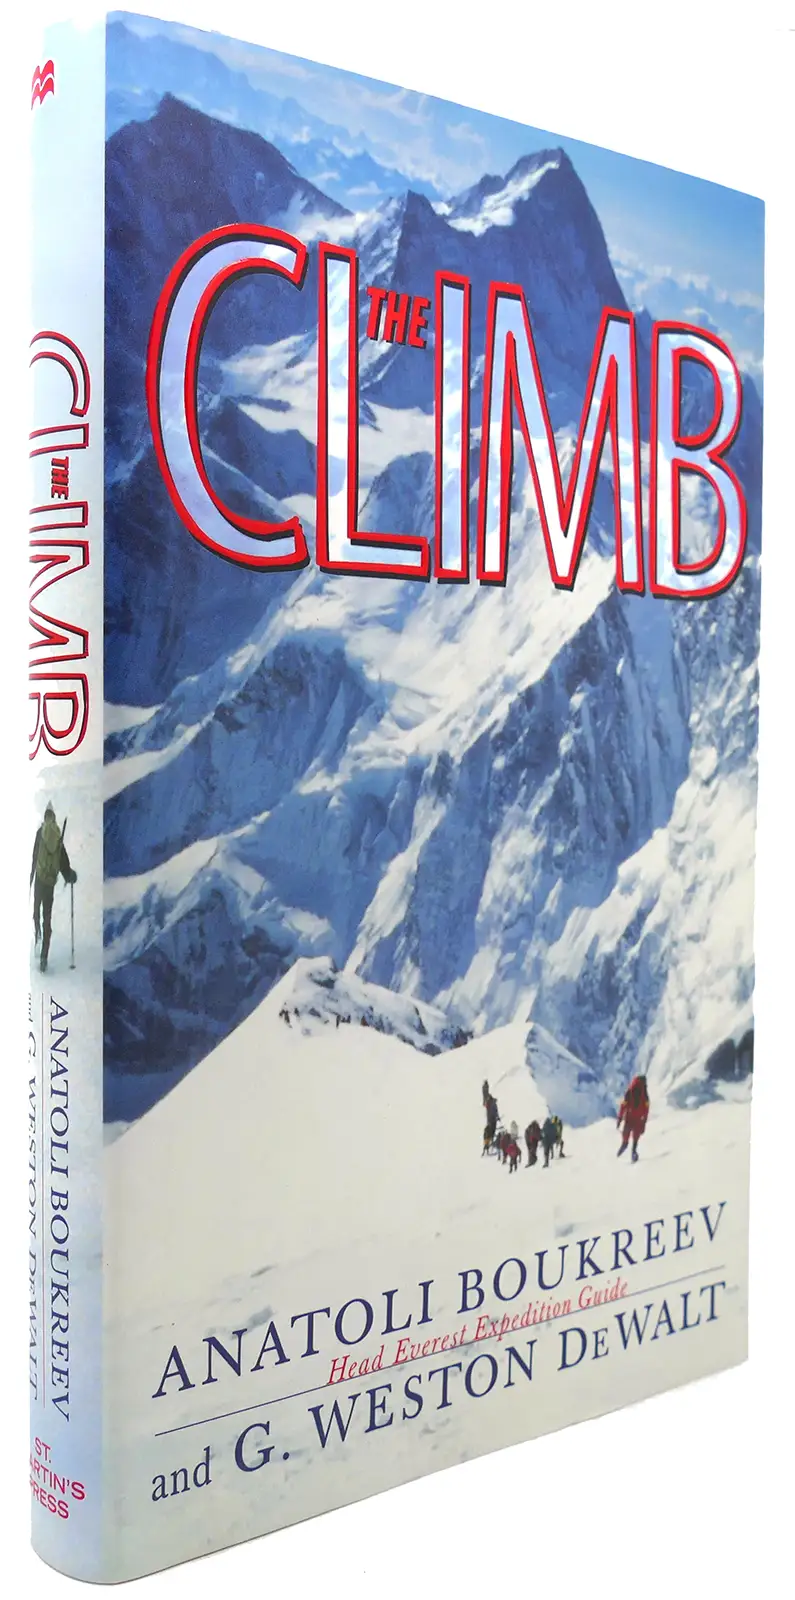 The Climb: Tragic Ambitions on Everest book by Anatoli Boukreev